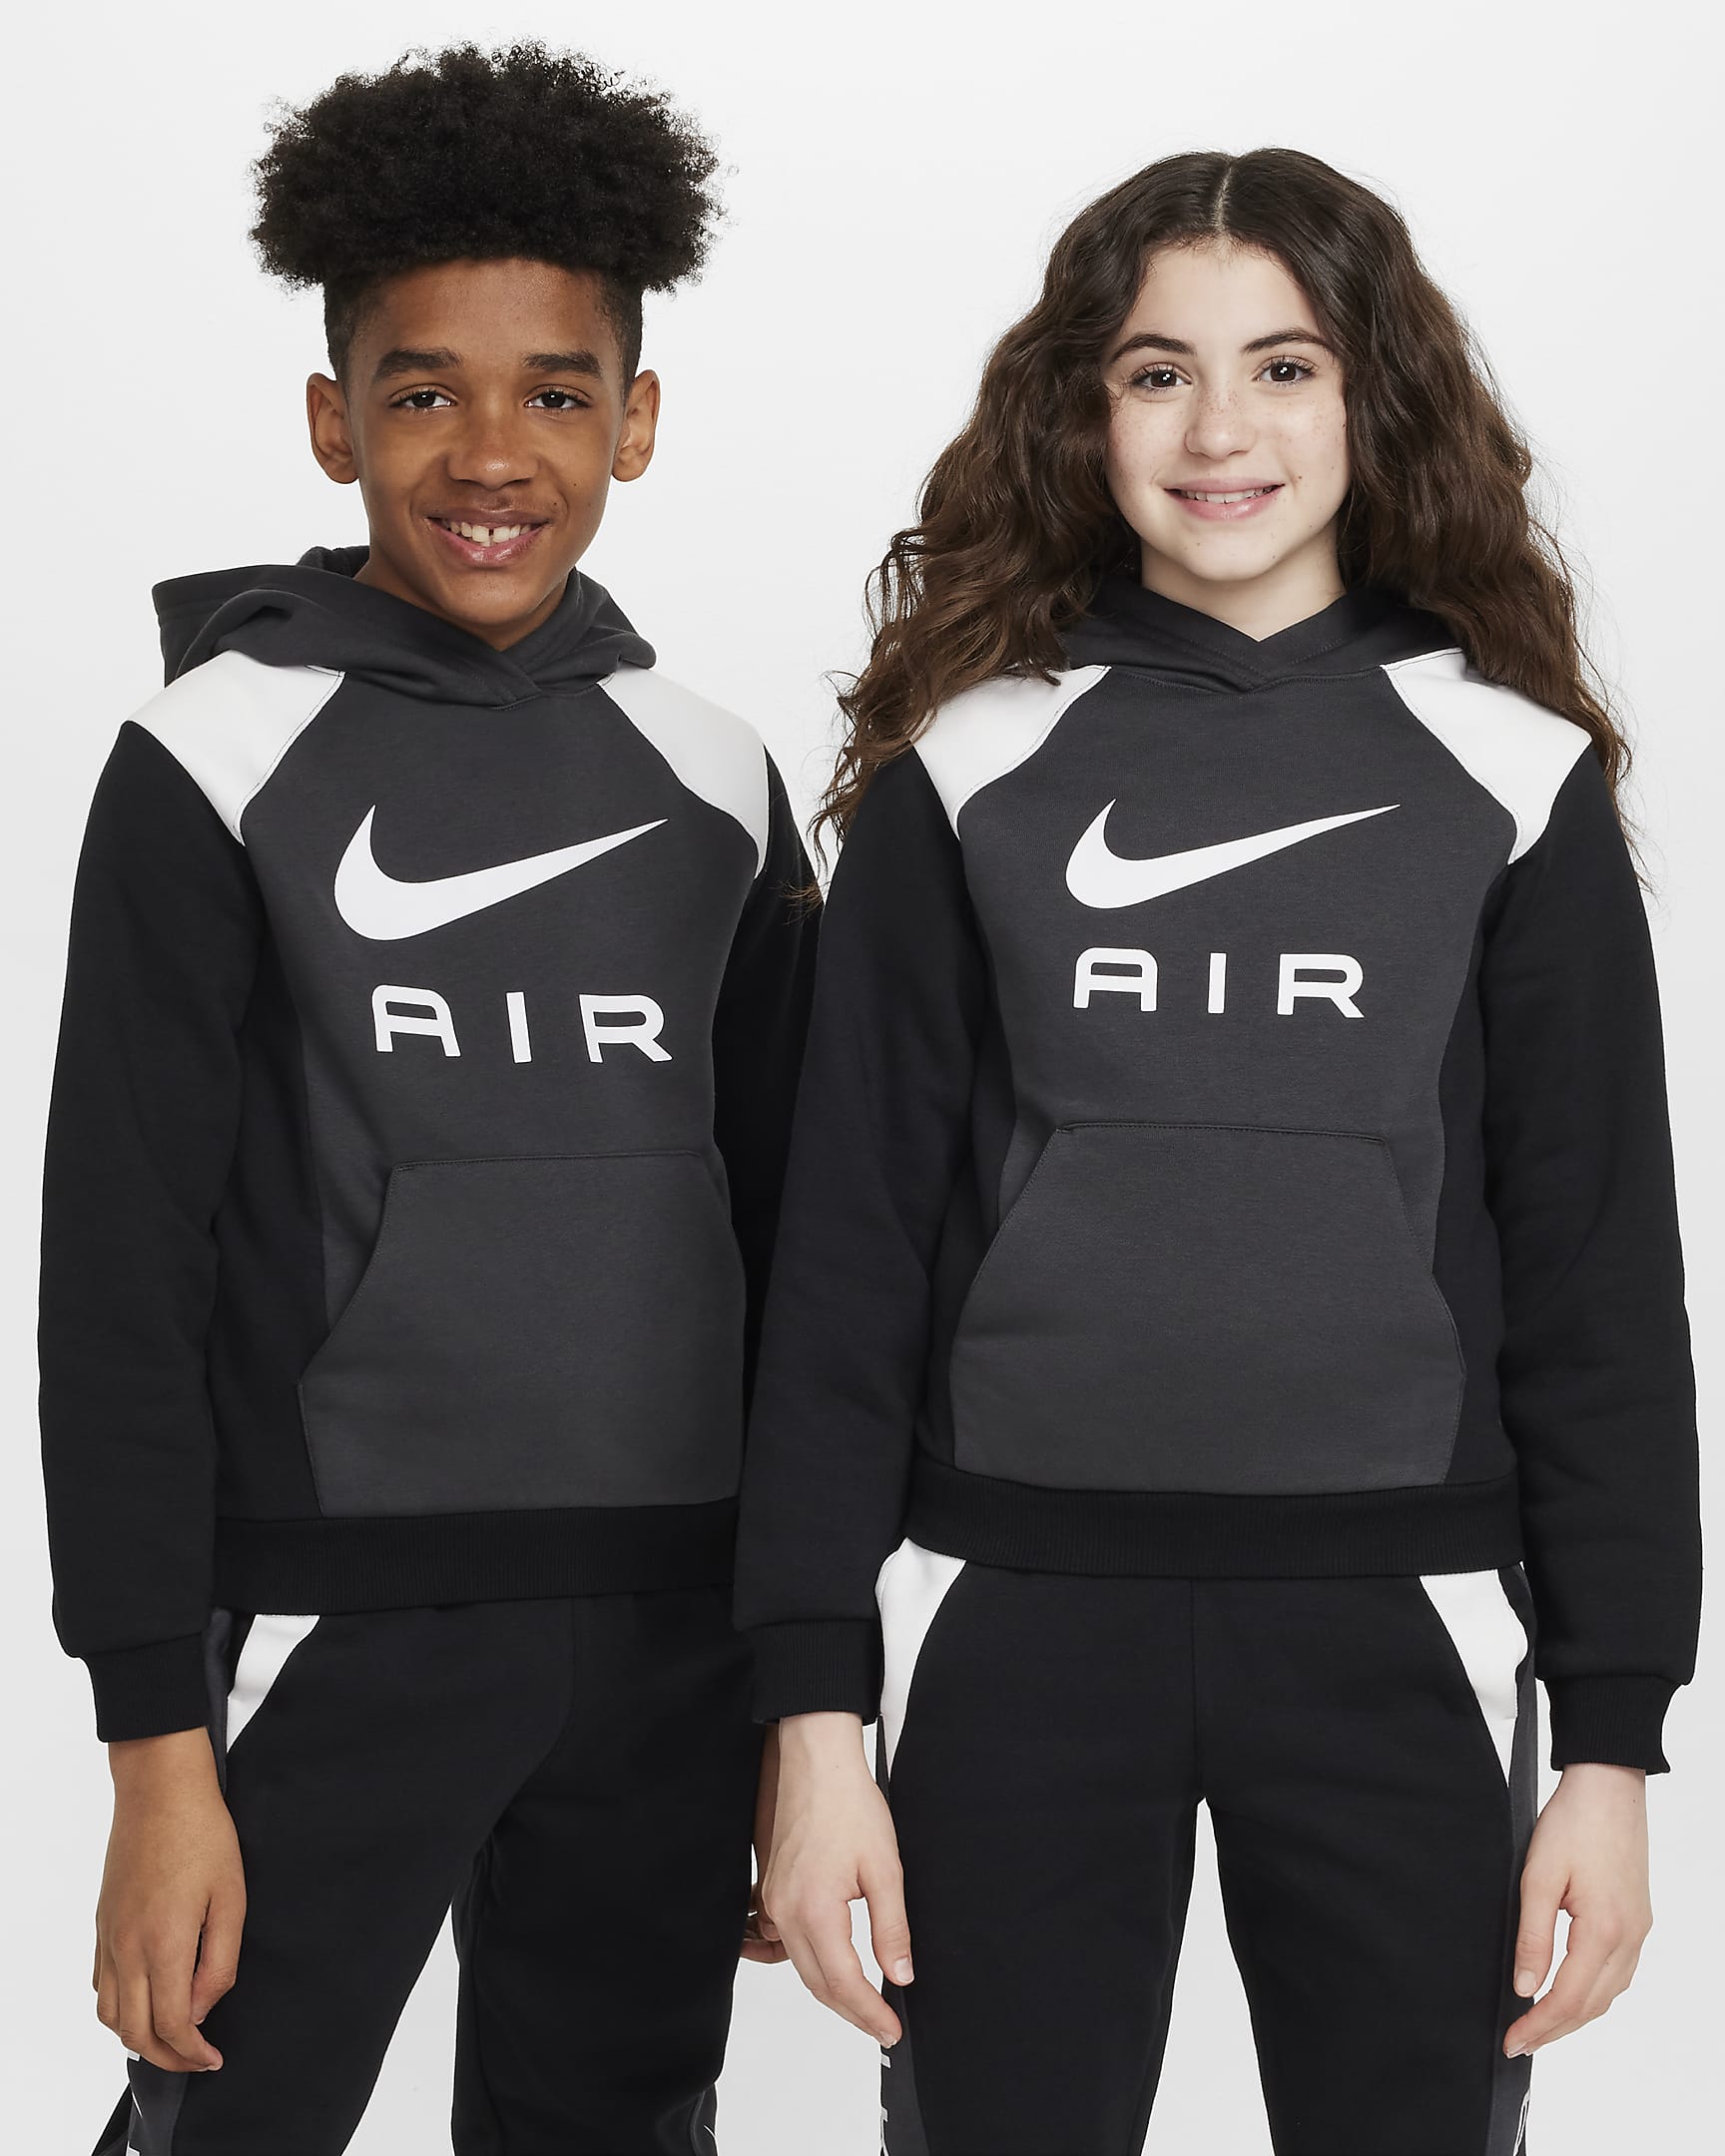 Nike Air Genç Çocuk Kapüşonlu Sweatshirt'ü - Anthracite/Siyah/Beyaz/Beyaz